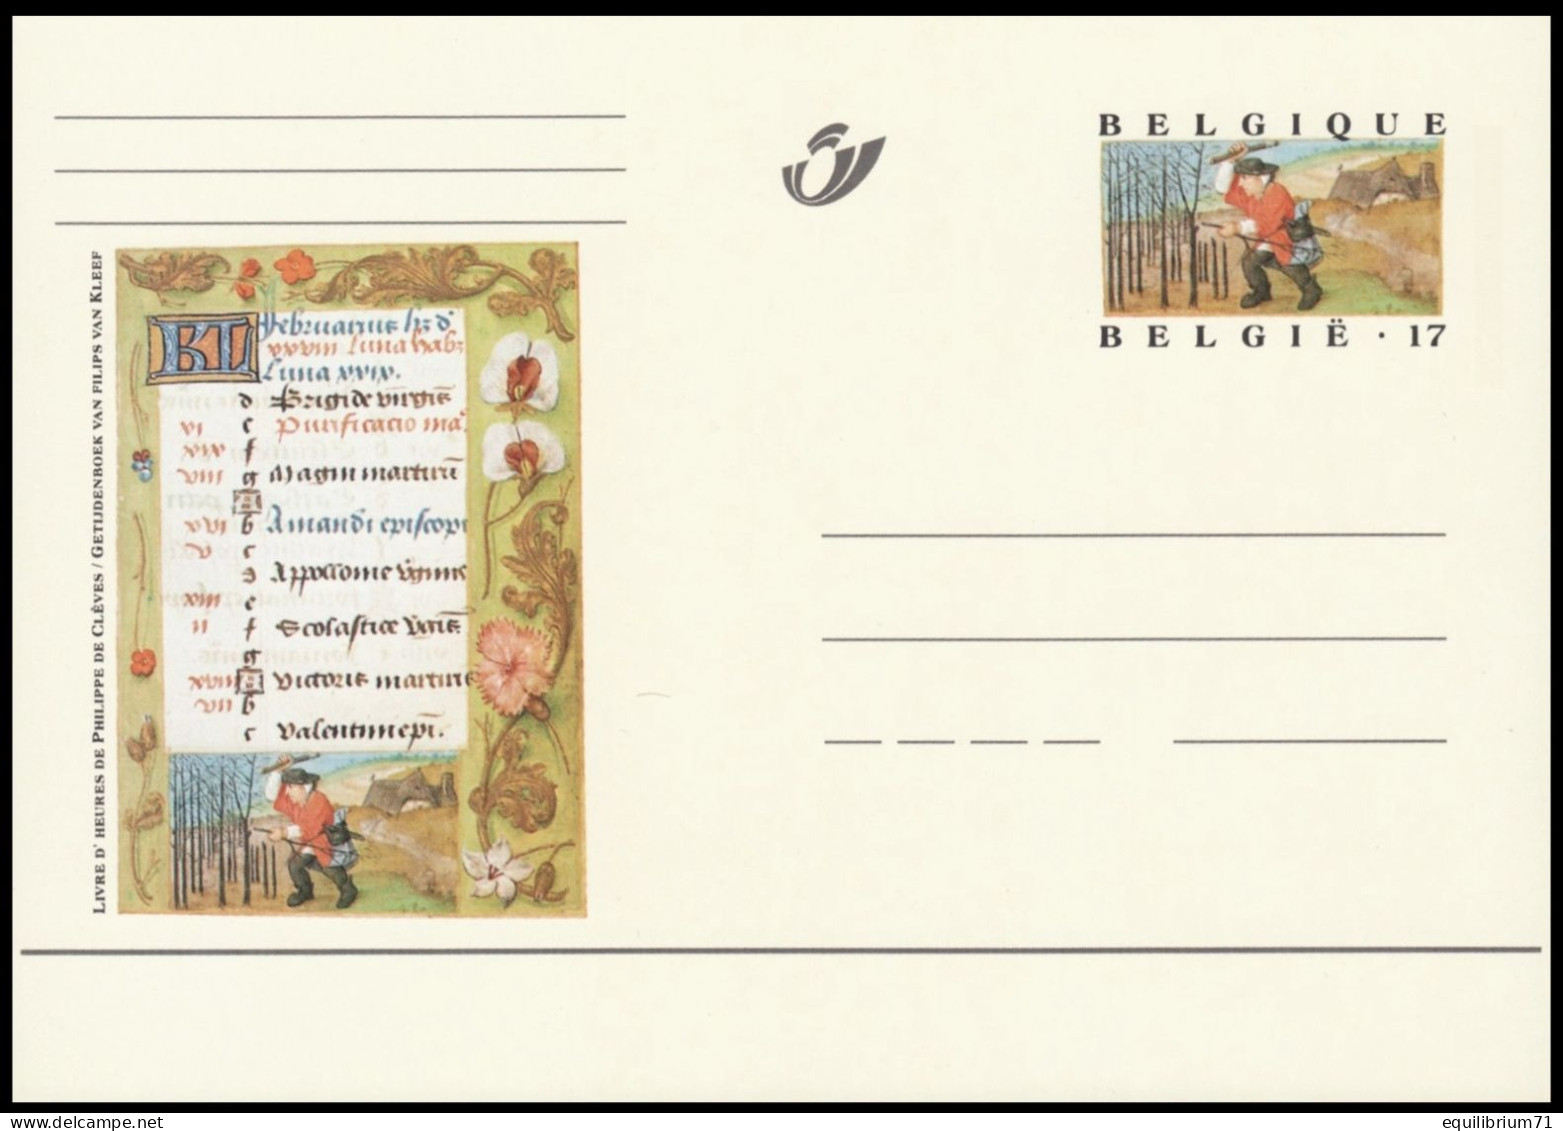 Cartes Illustrées / Geïllustreerde Kaarten / Illustrierte Karten 62.1-12(BK54/65) - NEUF / NIEUW- 1997 - Carolophilex - Illustrierte Postkarten (1971-2014) [BK]